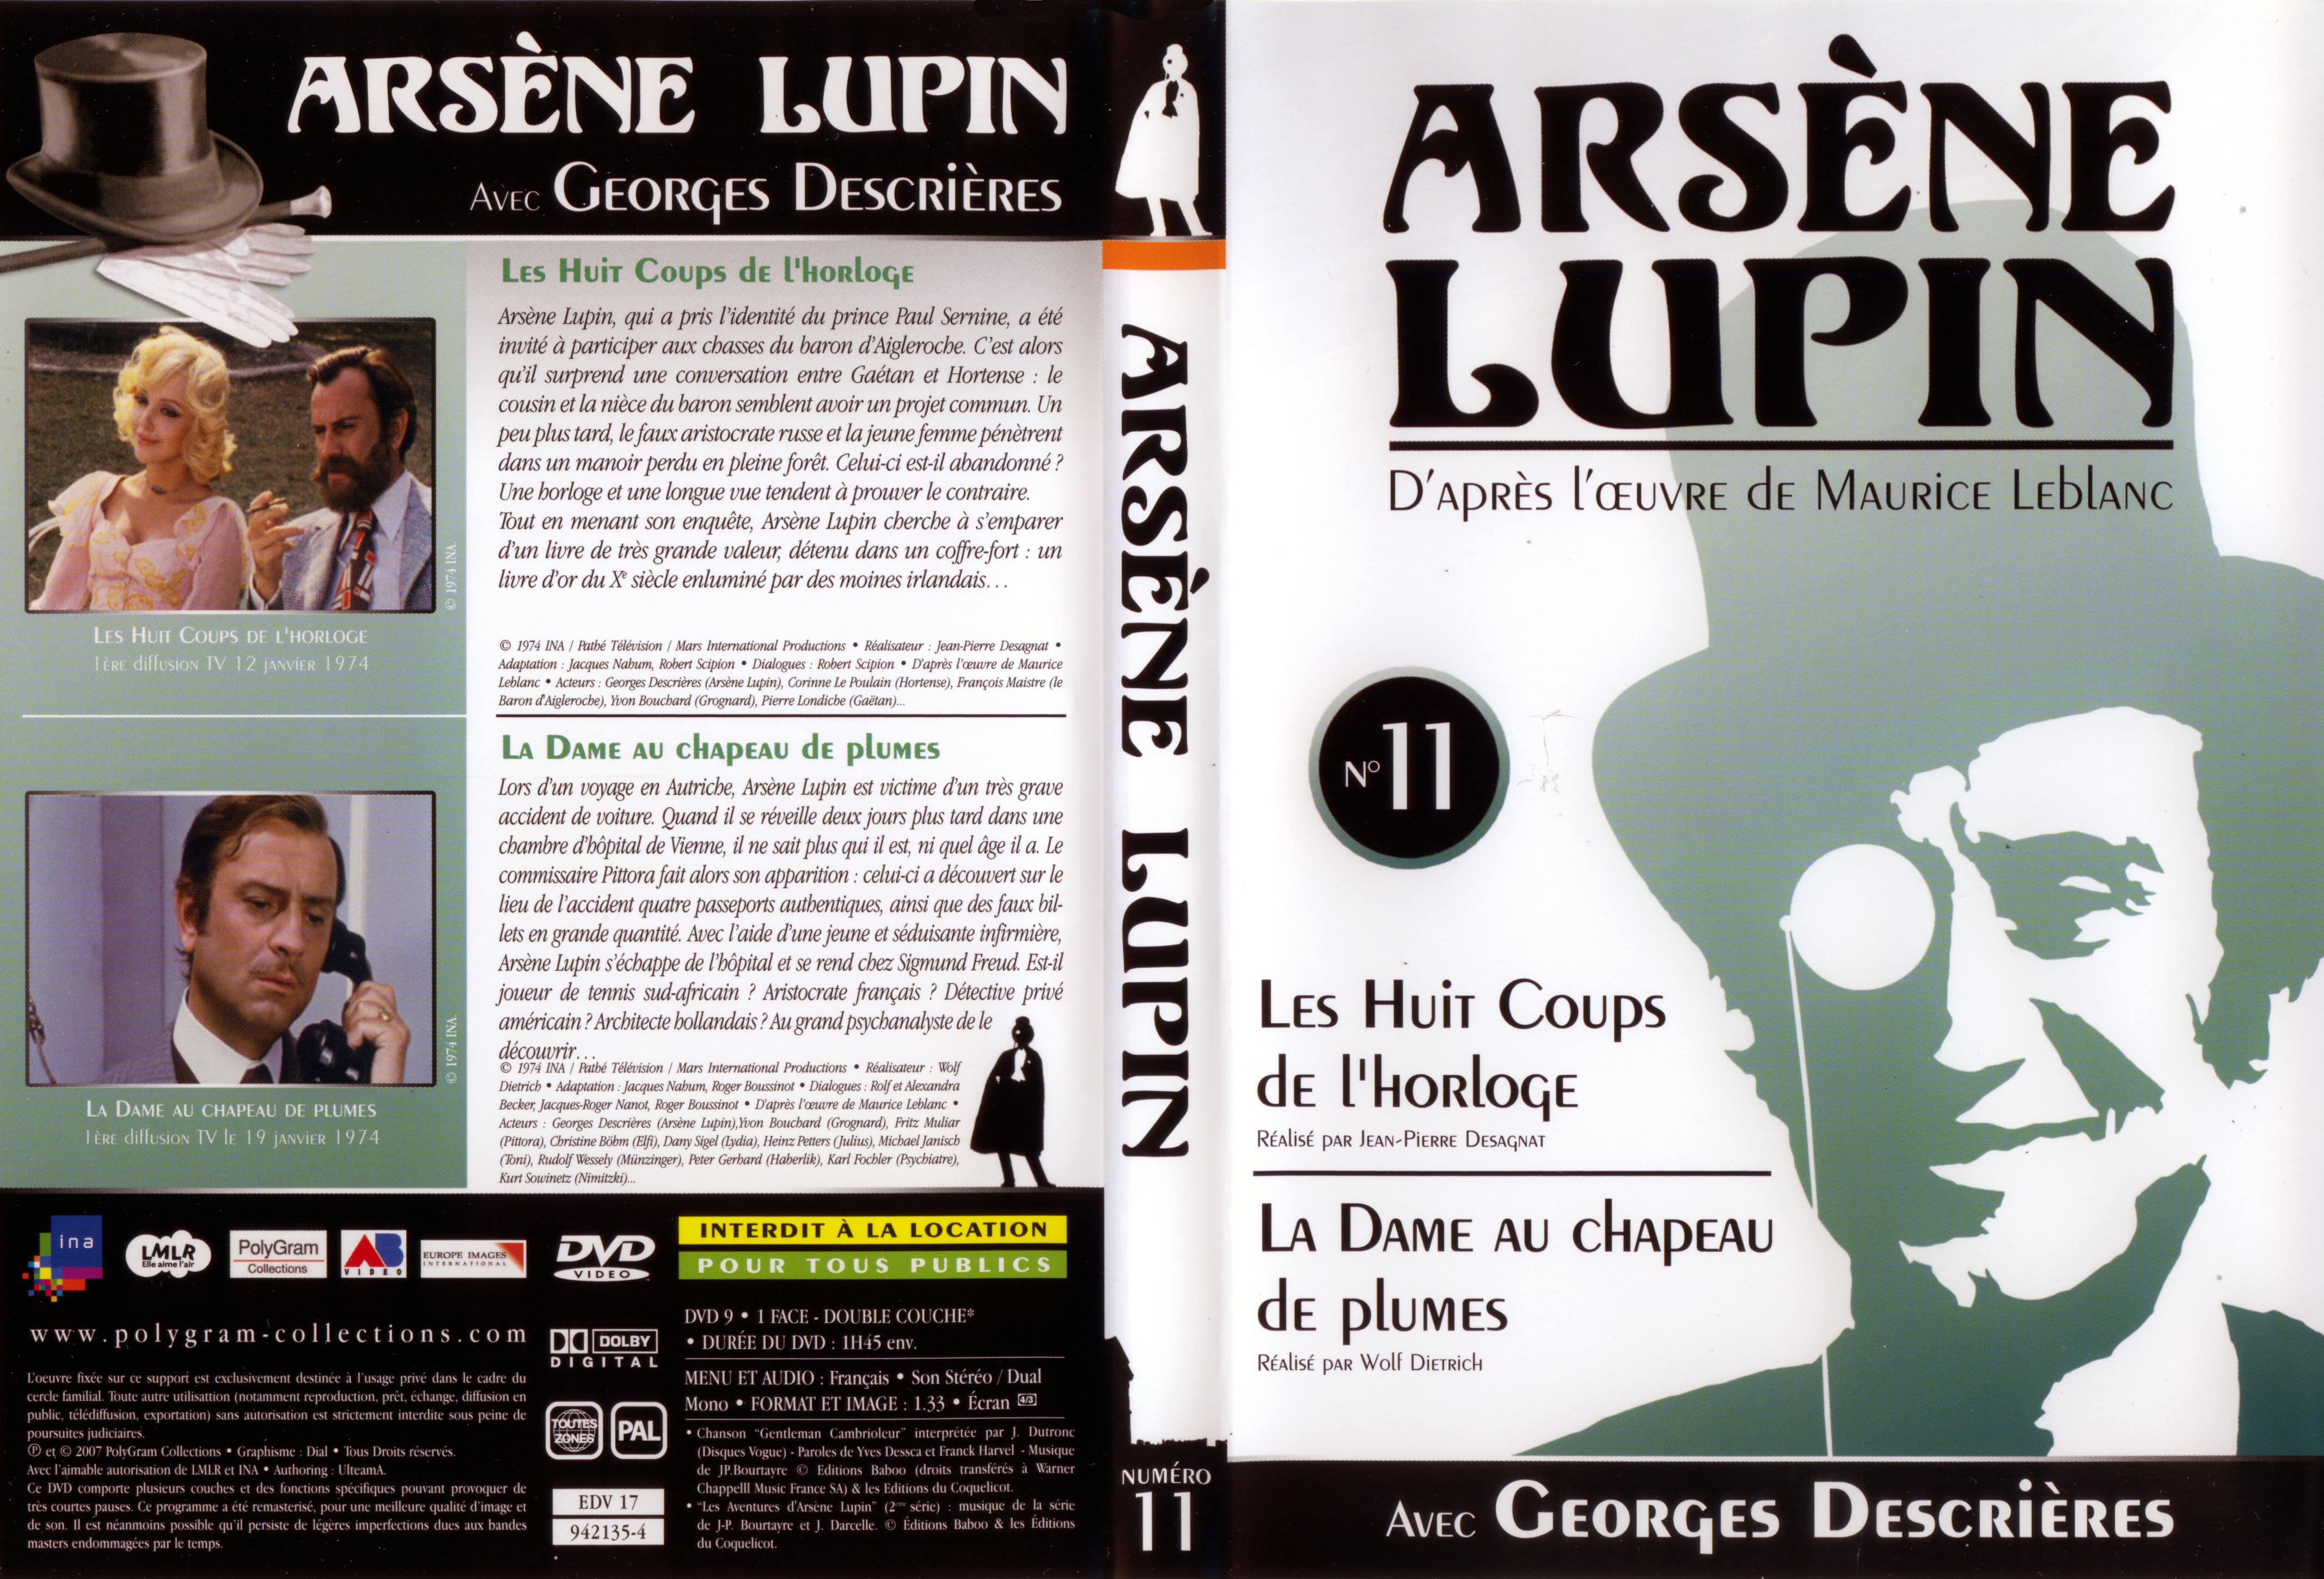 Jaquette DVD Arsene Lupin DVD 11